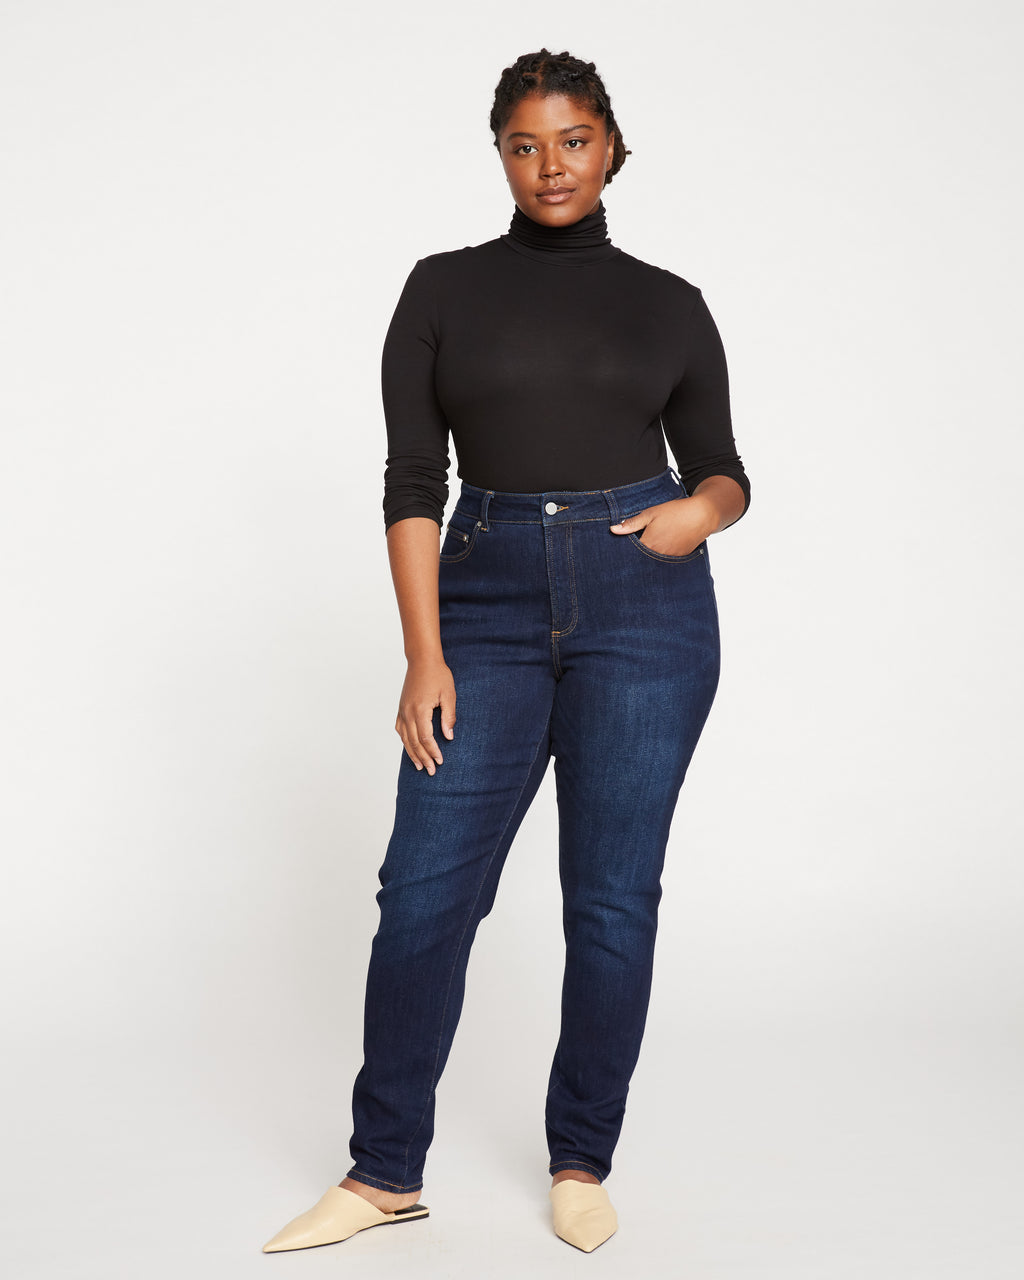 Long Jeans - Women's Long Inseam Denim | Universal Standard